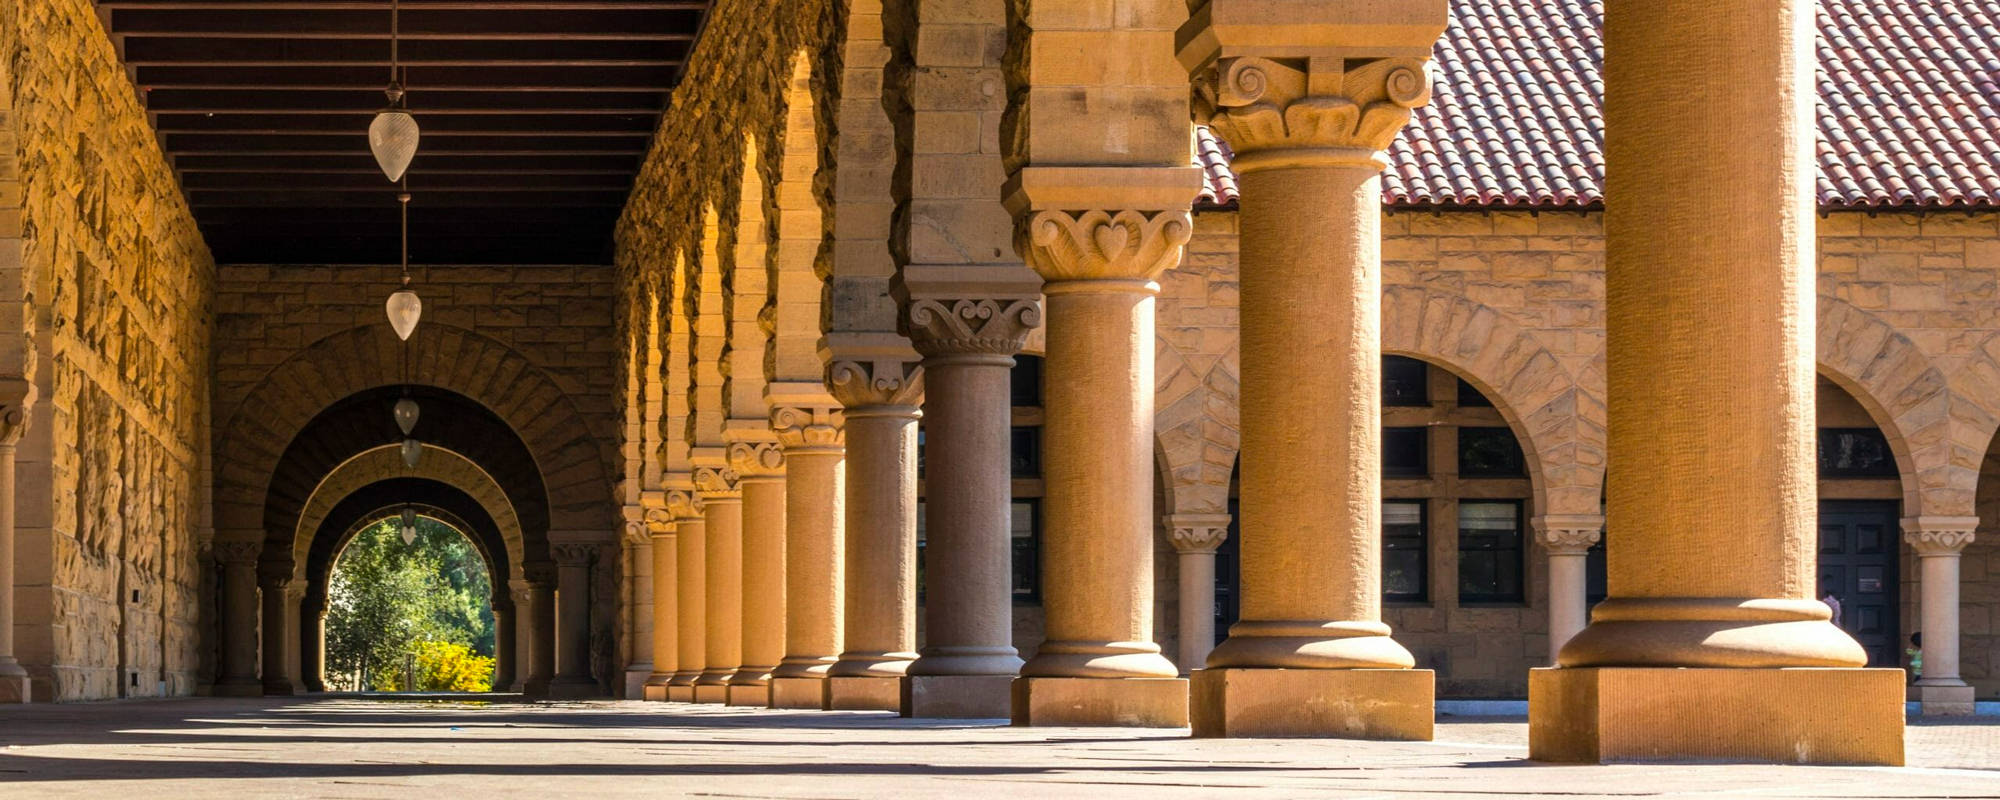 Campus walkway with pillars